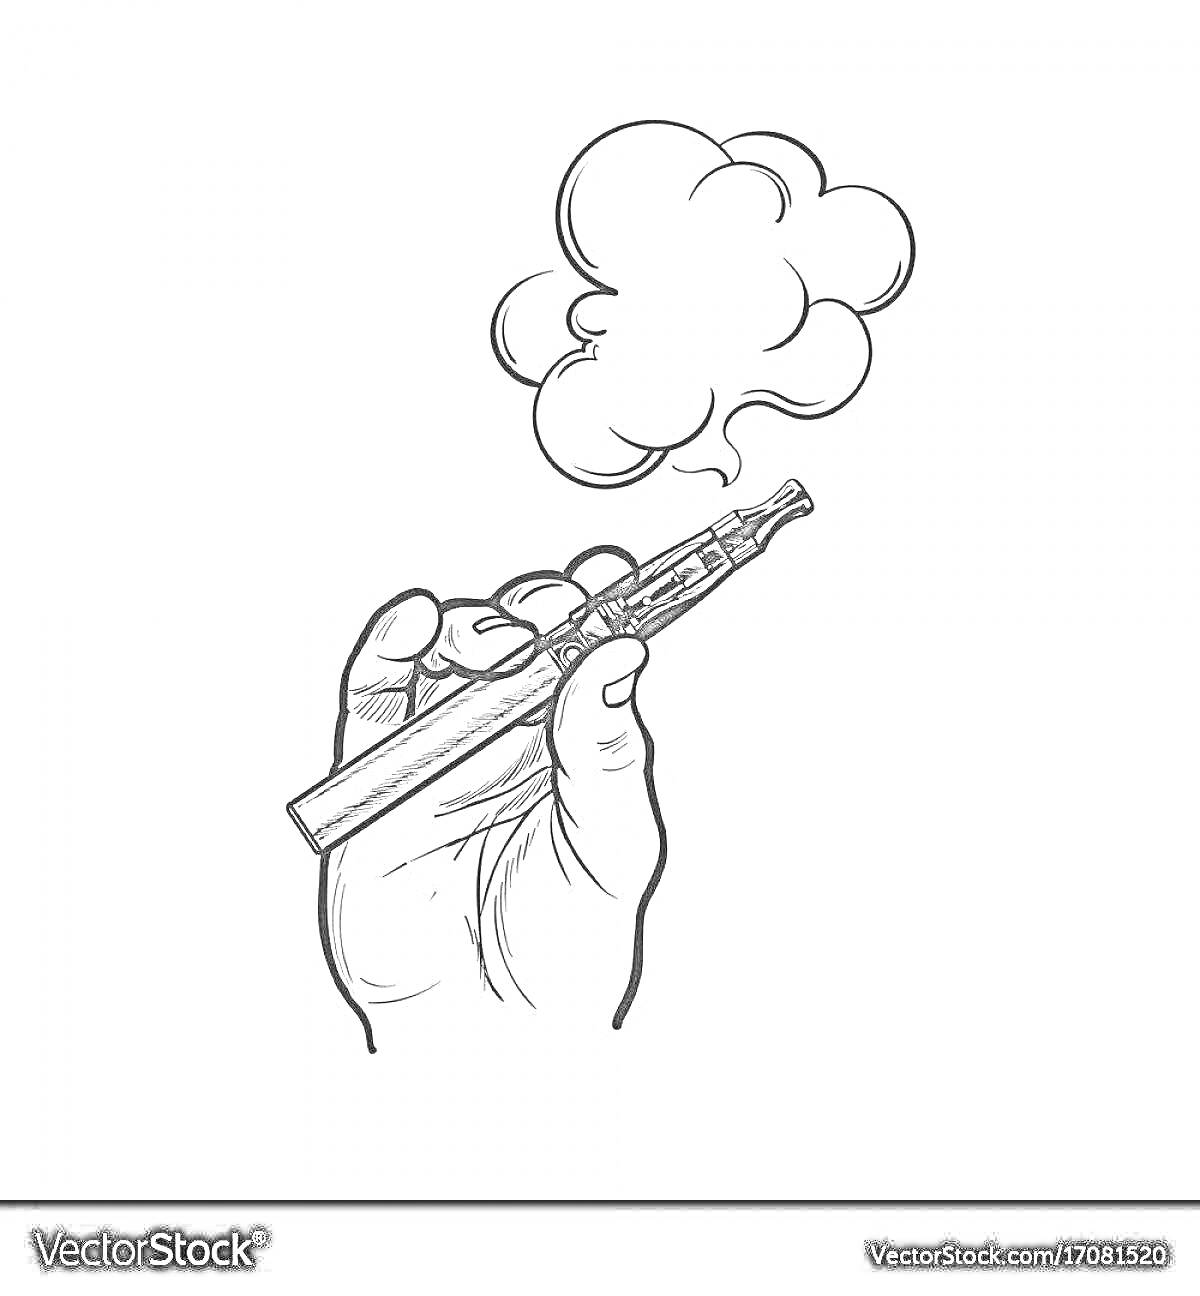 На раскраске изображено: Рука, Вейп, Облако дыма, Курение, Пар, Электронная сигарета